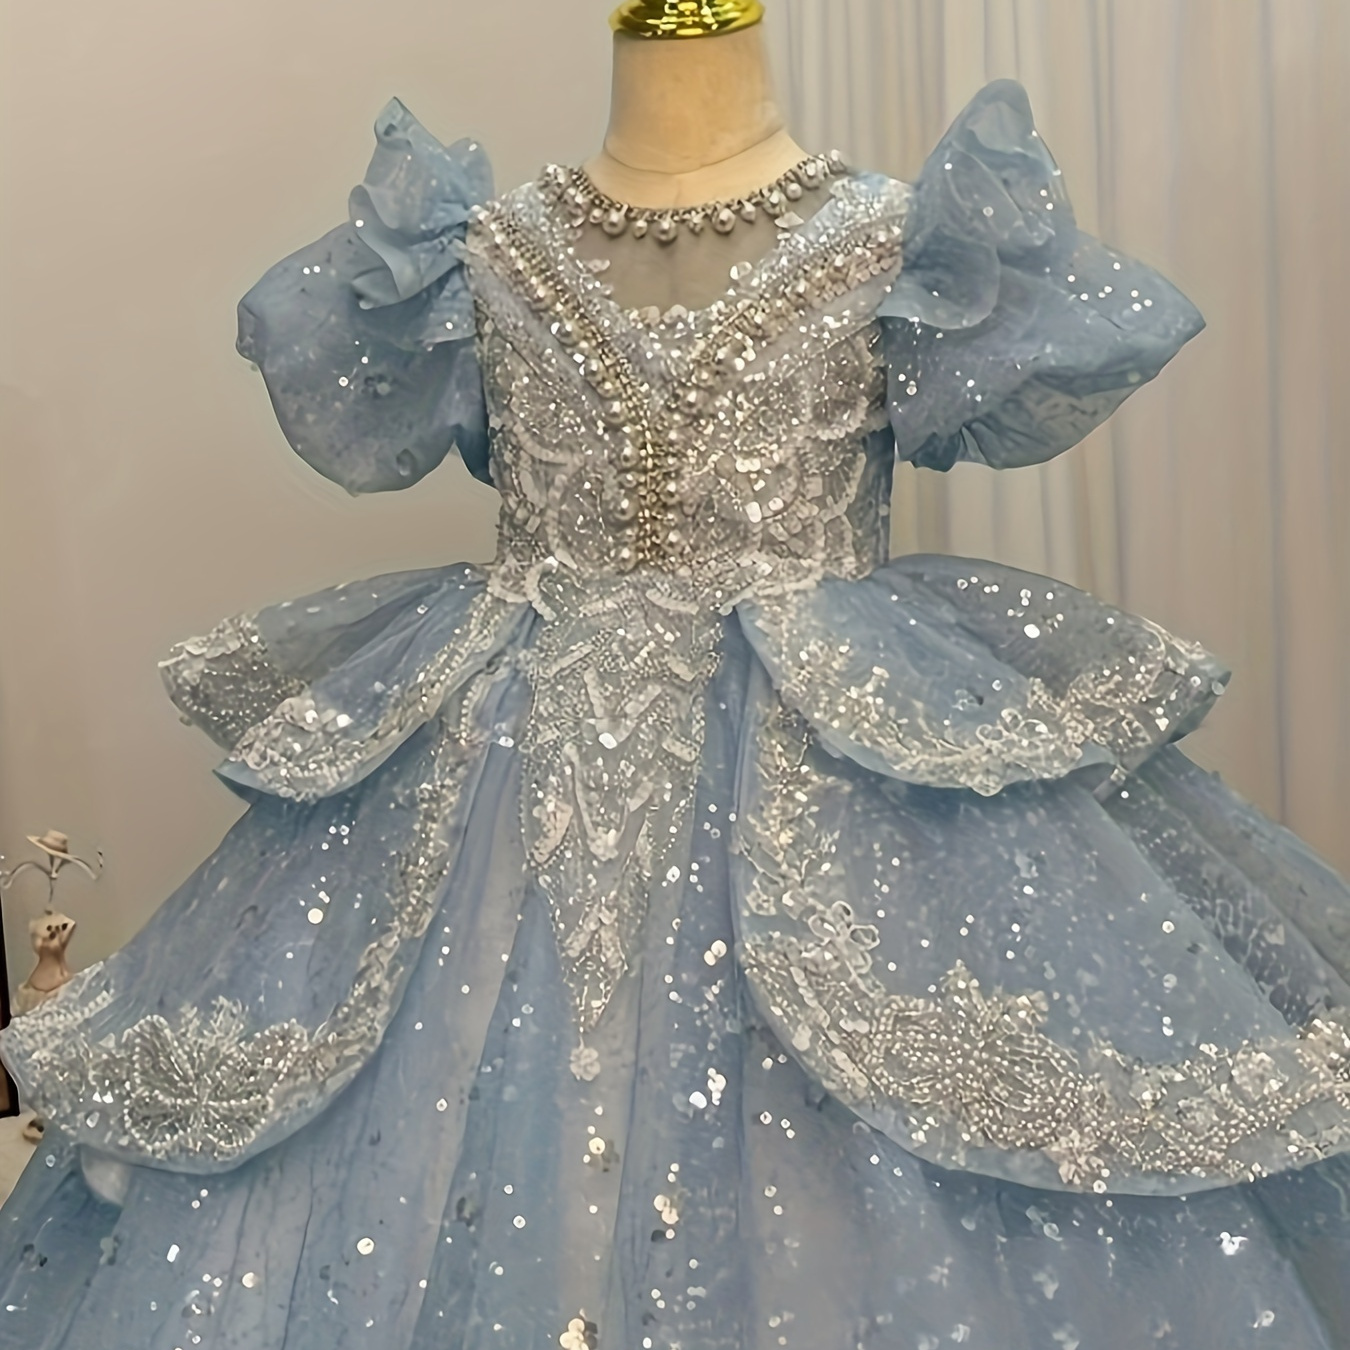 

Girl Dress, Piano Costume, Host, Catwalk, Fluffy Yarn, Birthday Party, Blue Children's Princess Dress